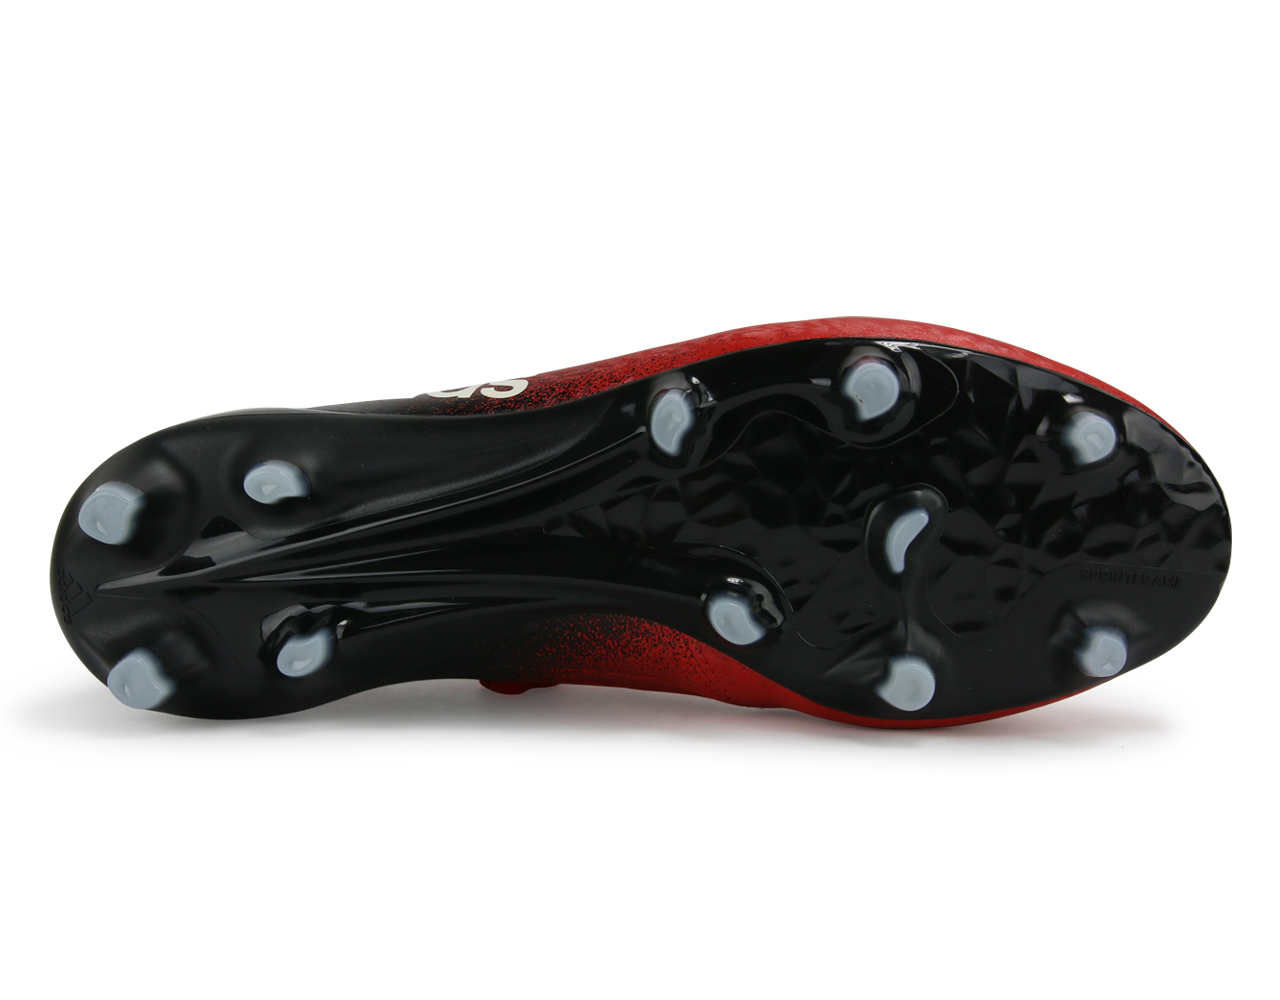 adidas Men's X 16.1 FG Red/White/Core Black